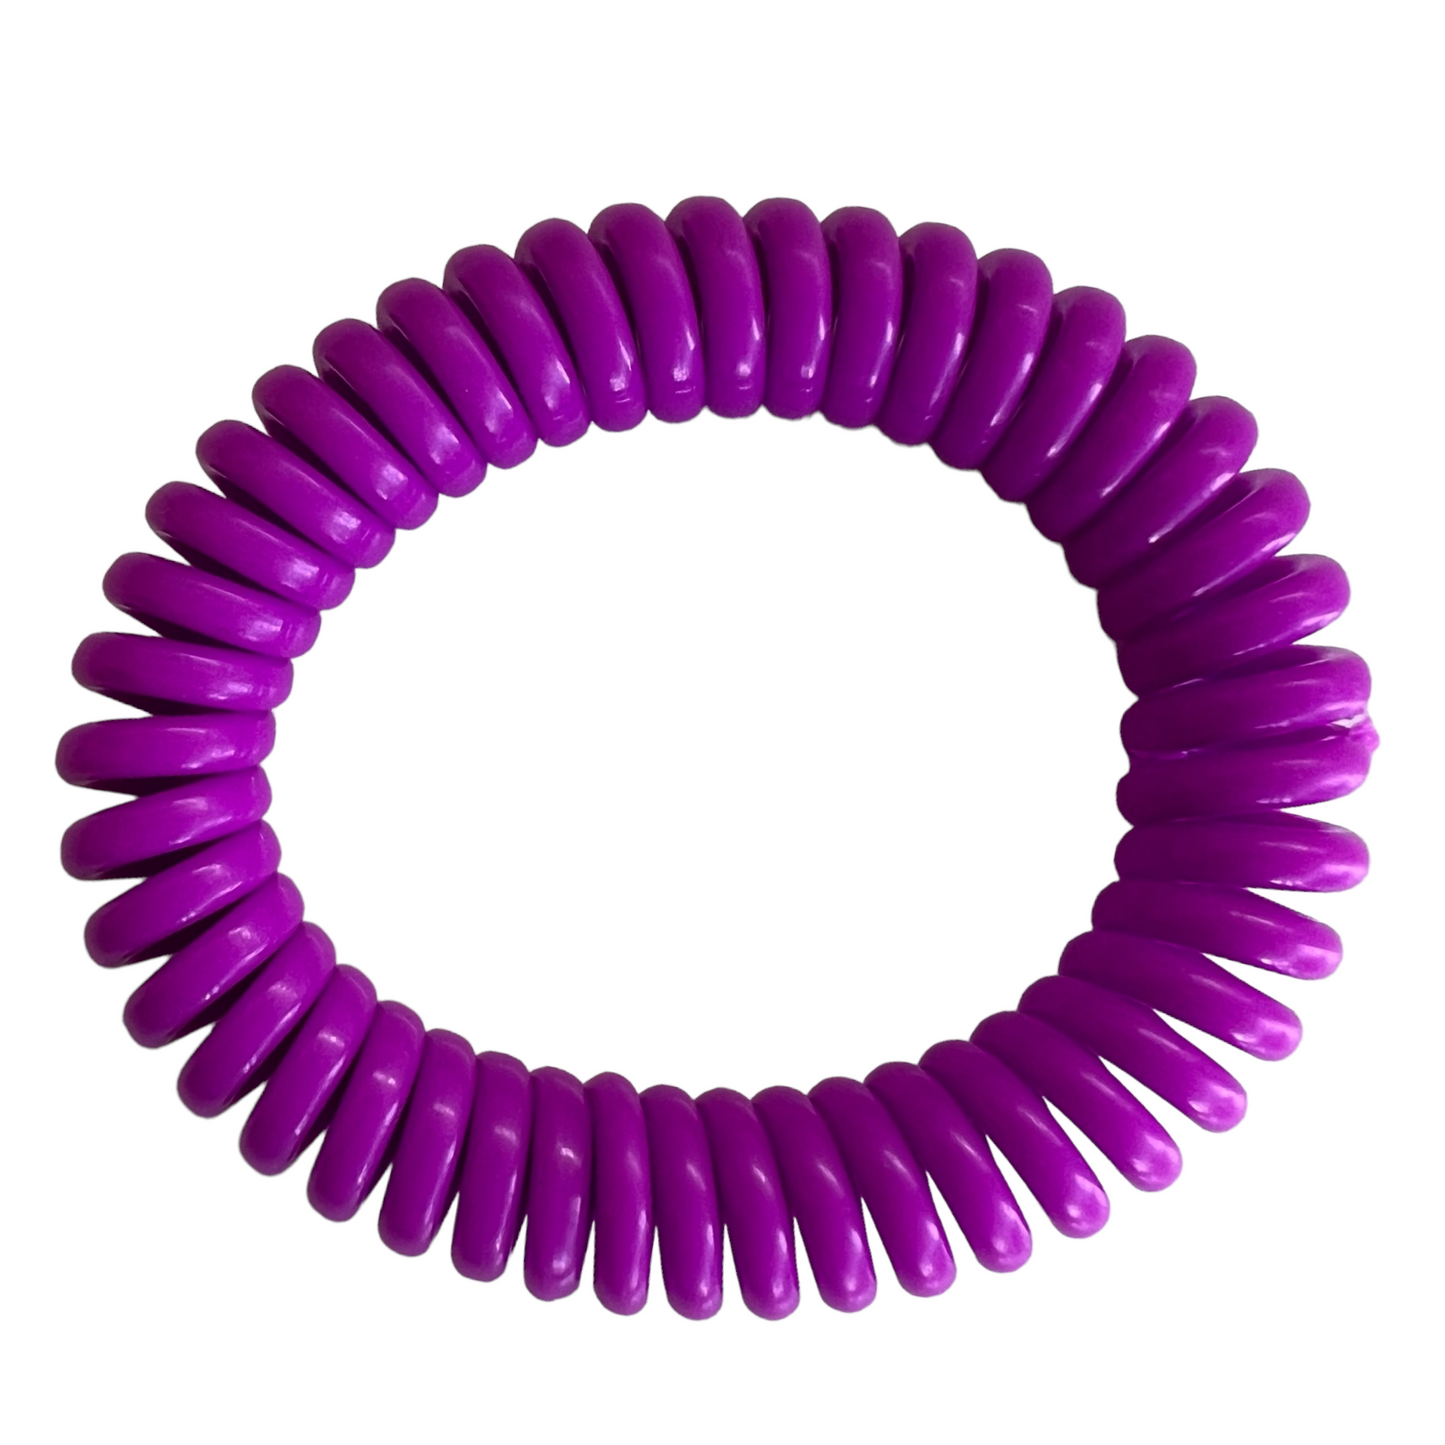 Natural Safe Mosquito Repellent Bracelets  SPIRIT SPARKPLUGS Purple  